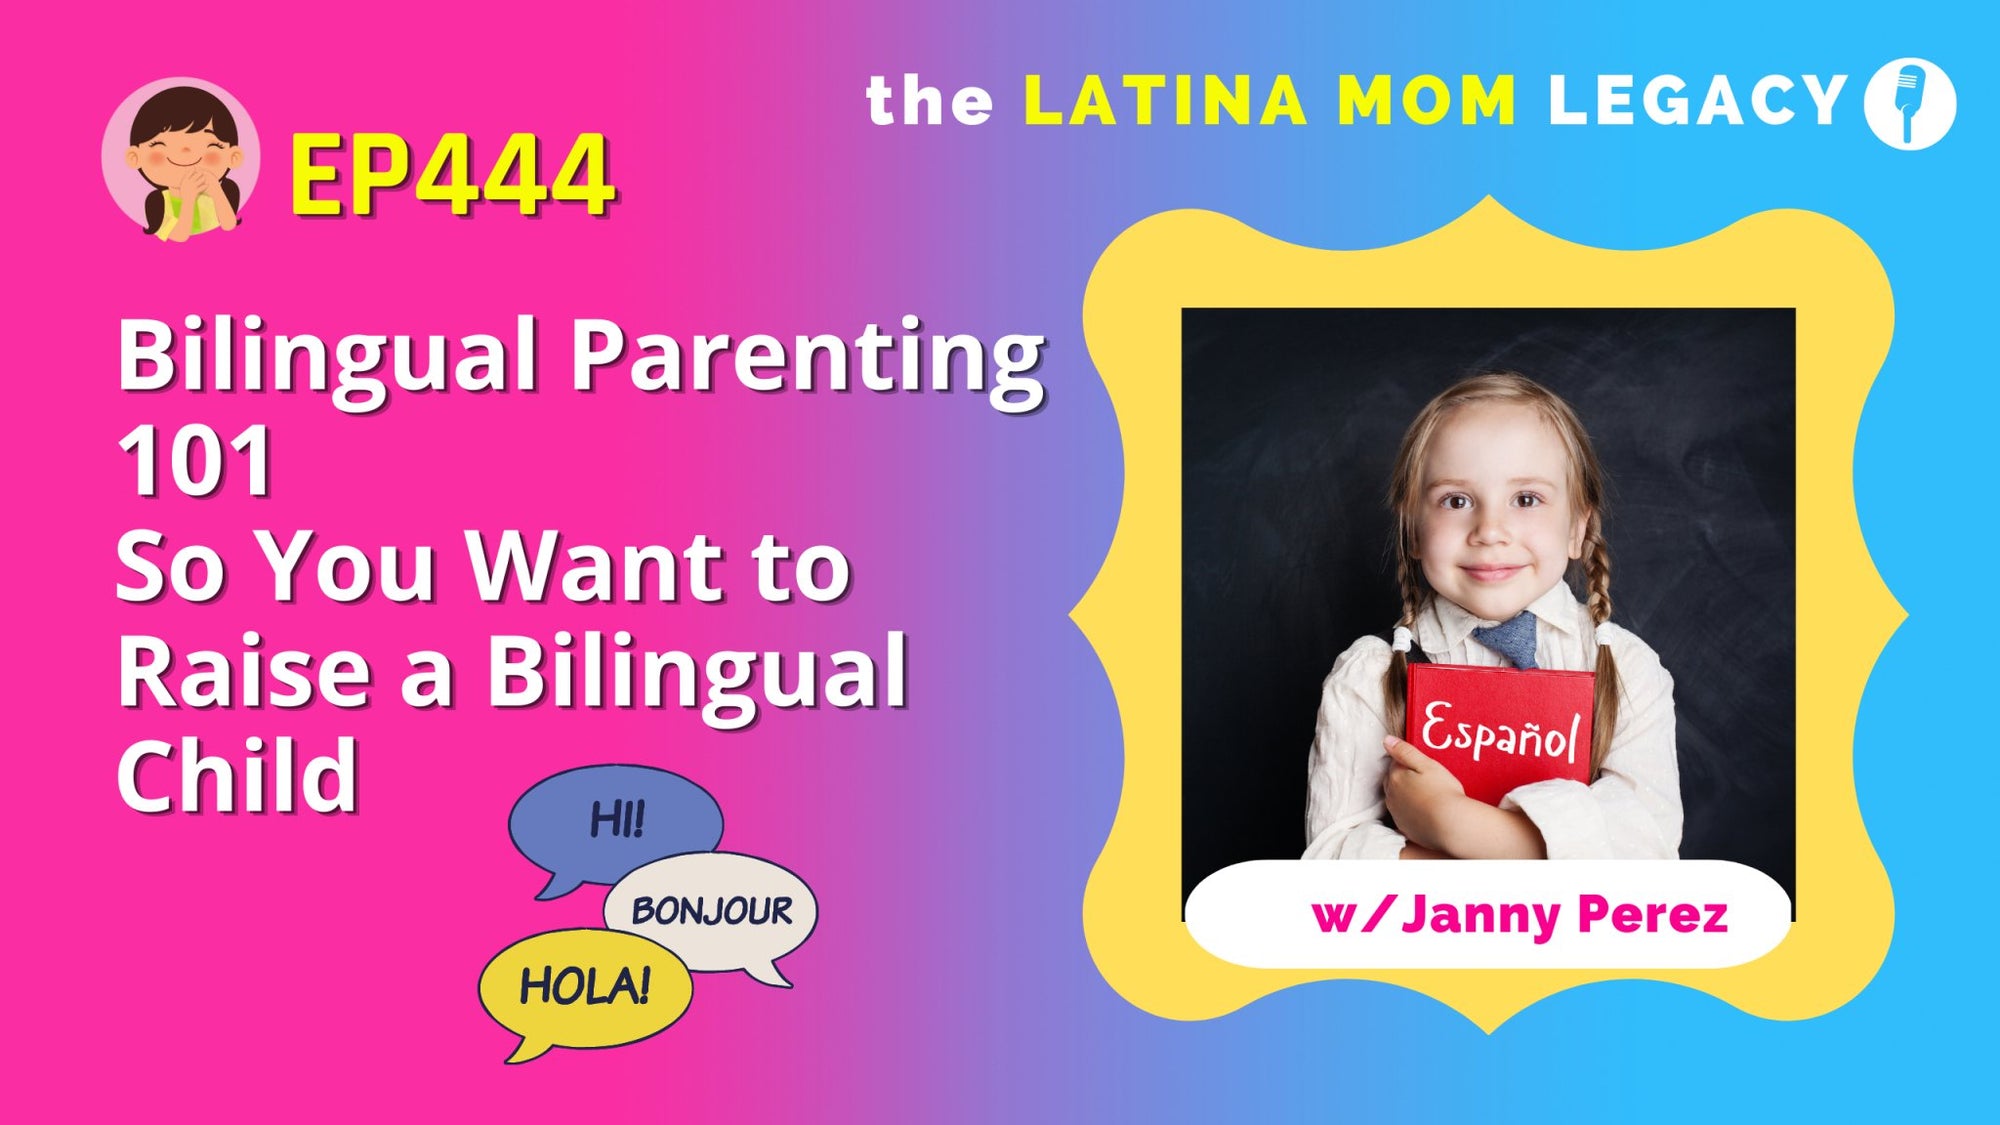 EP444 - Bilingual Parenting 101 - So You Want to Raise a Bilingual Child? - Mi LegaSi